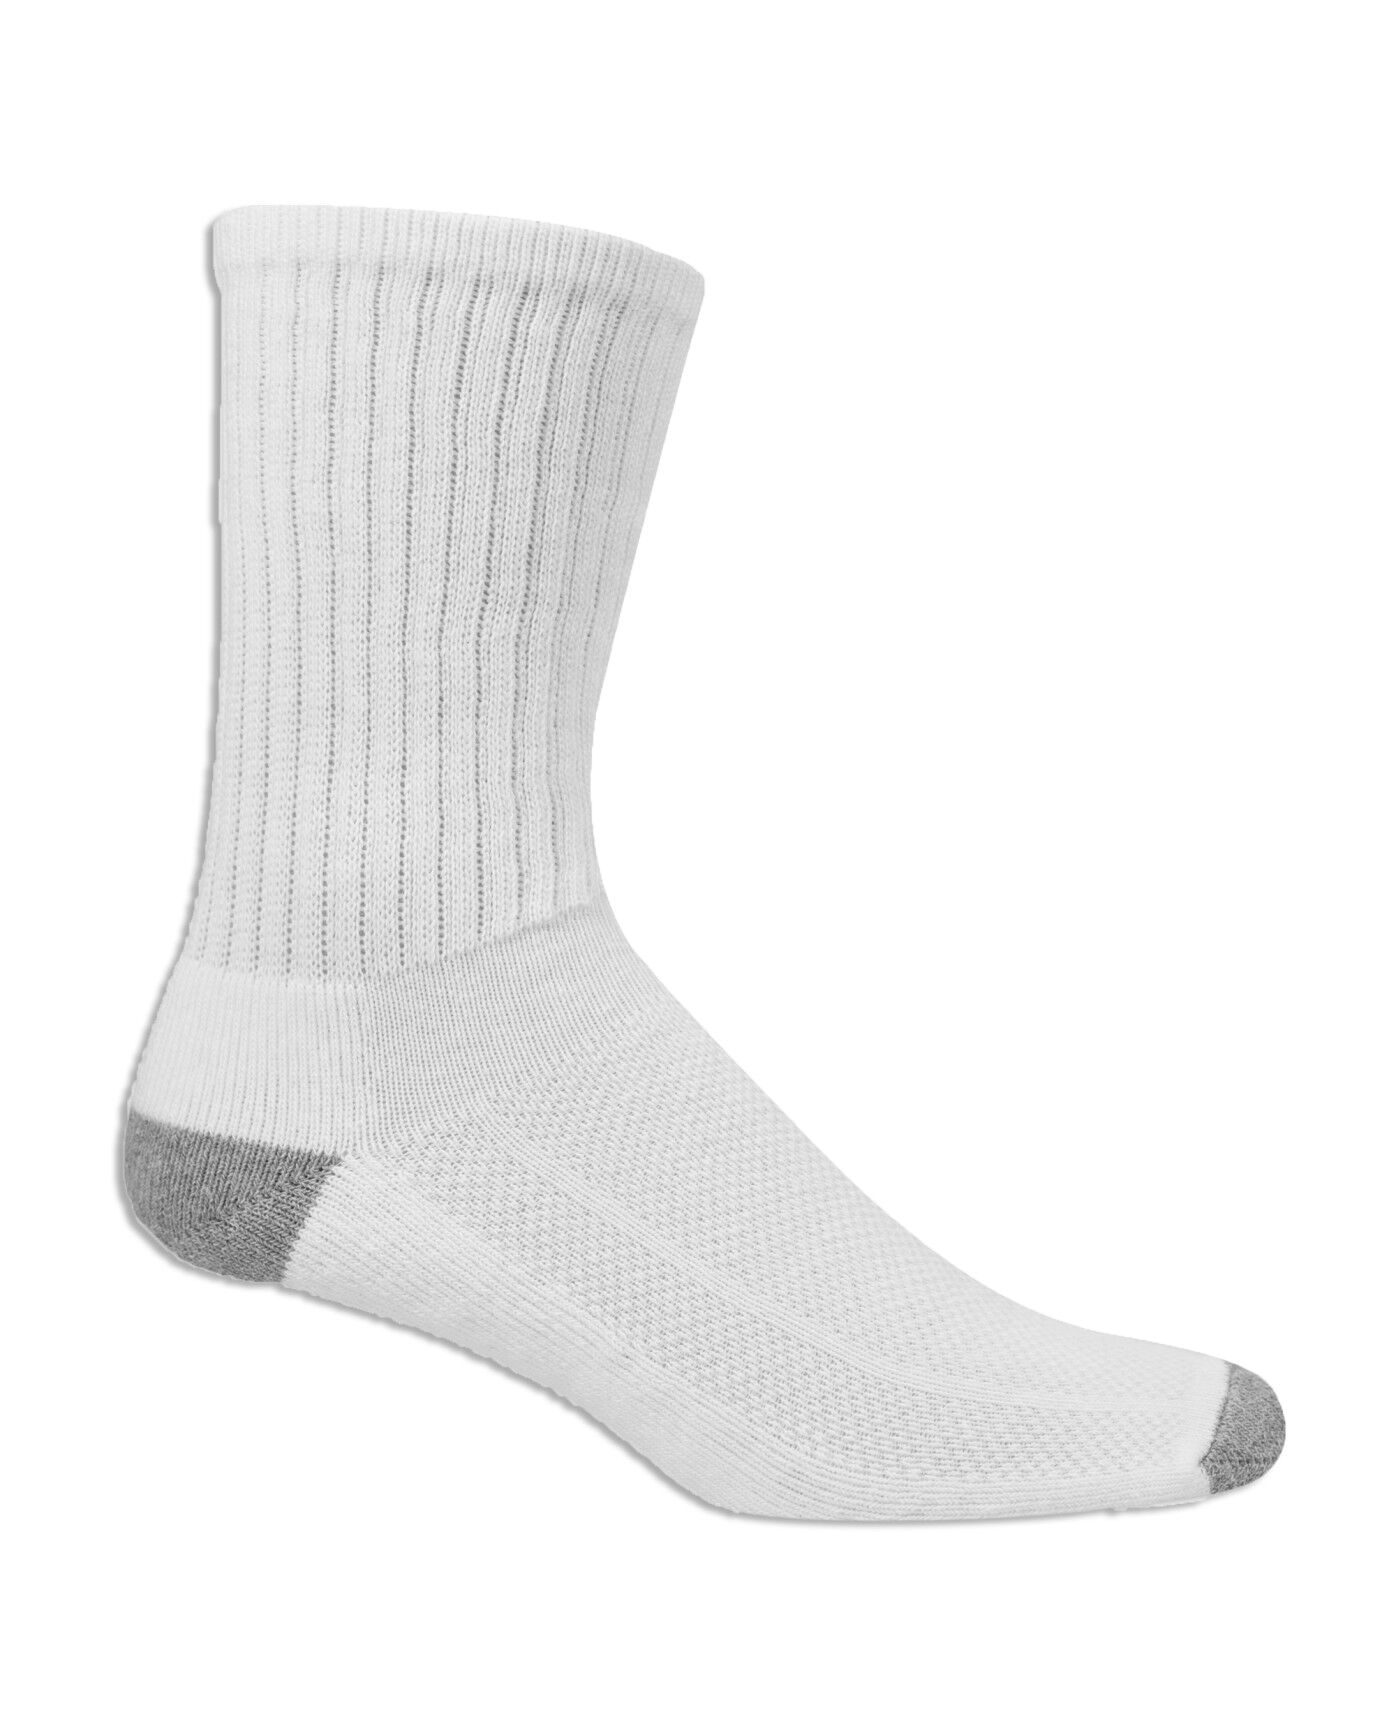 Men's Breathable Cotton Crew Socks, 6 